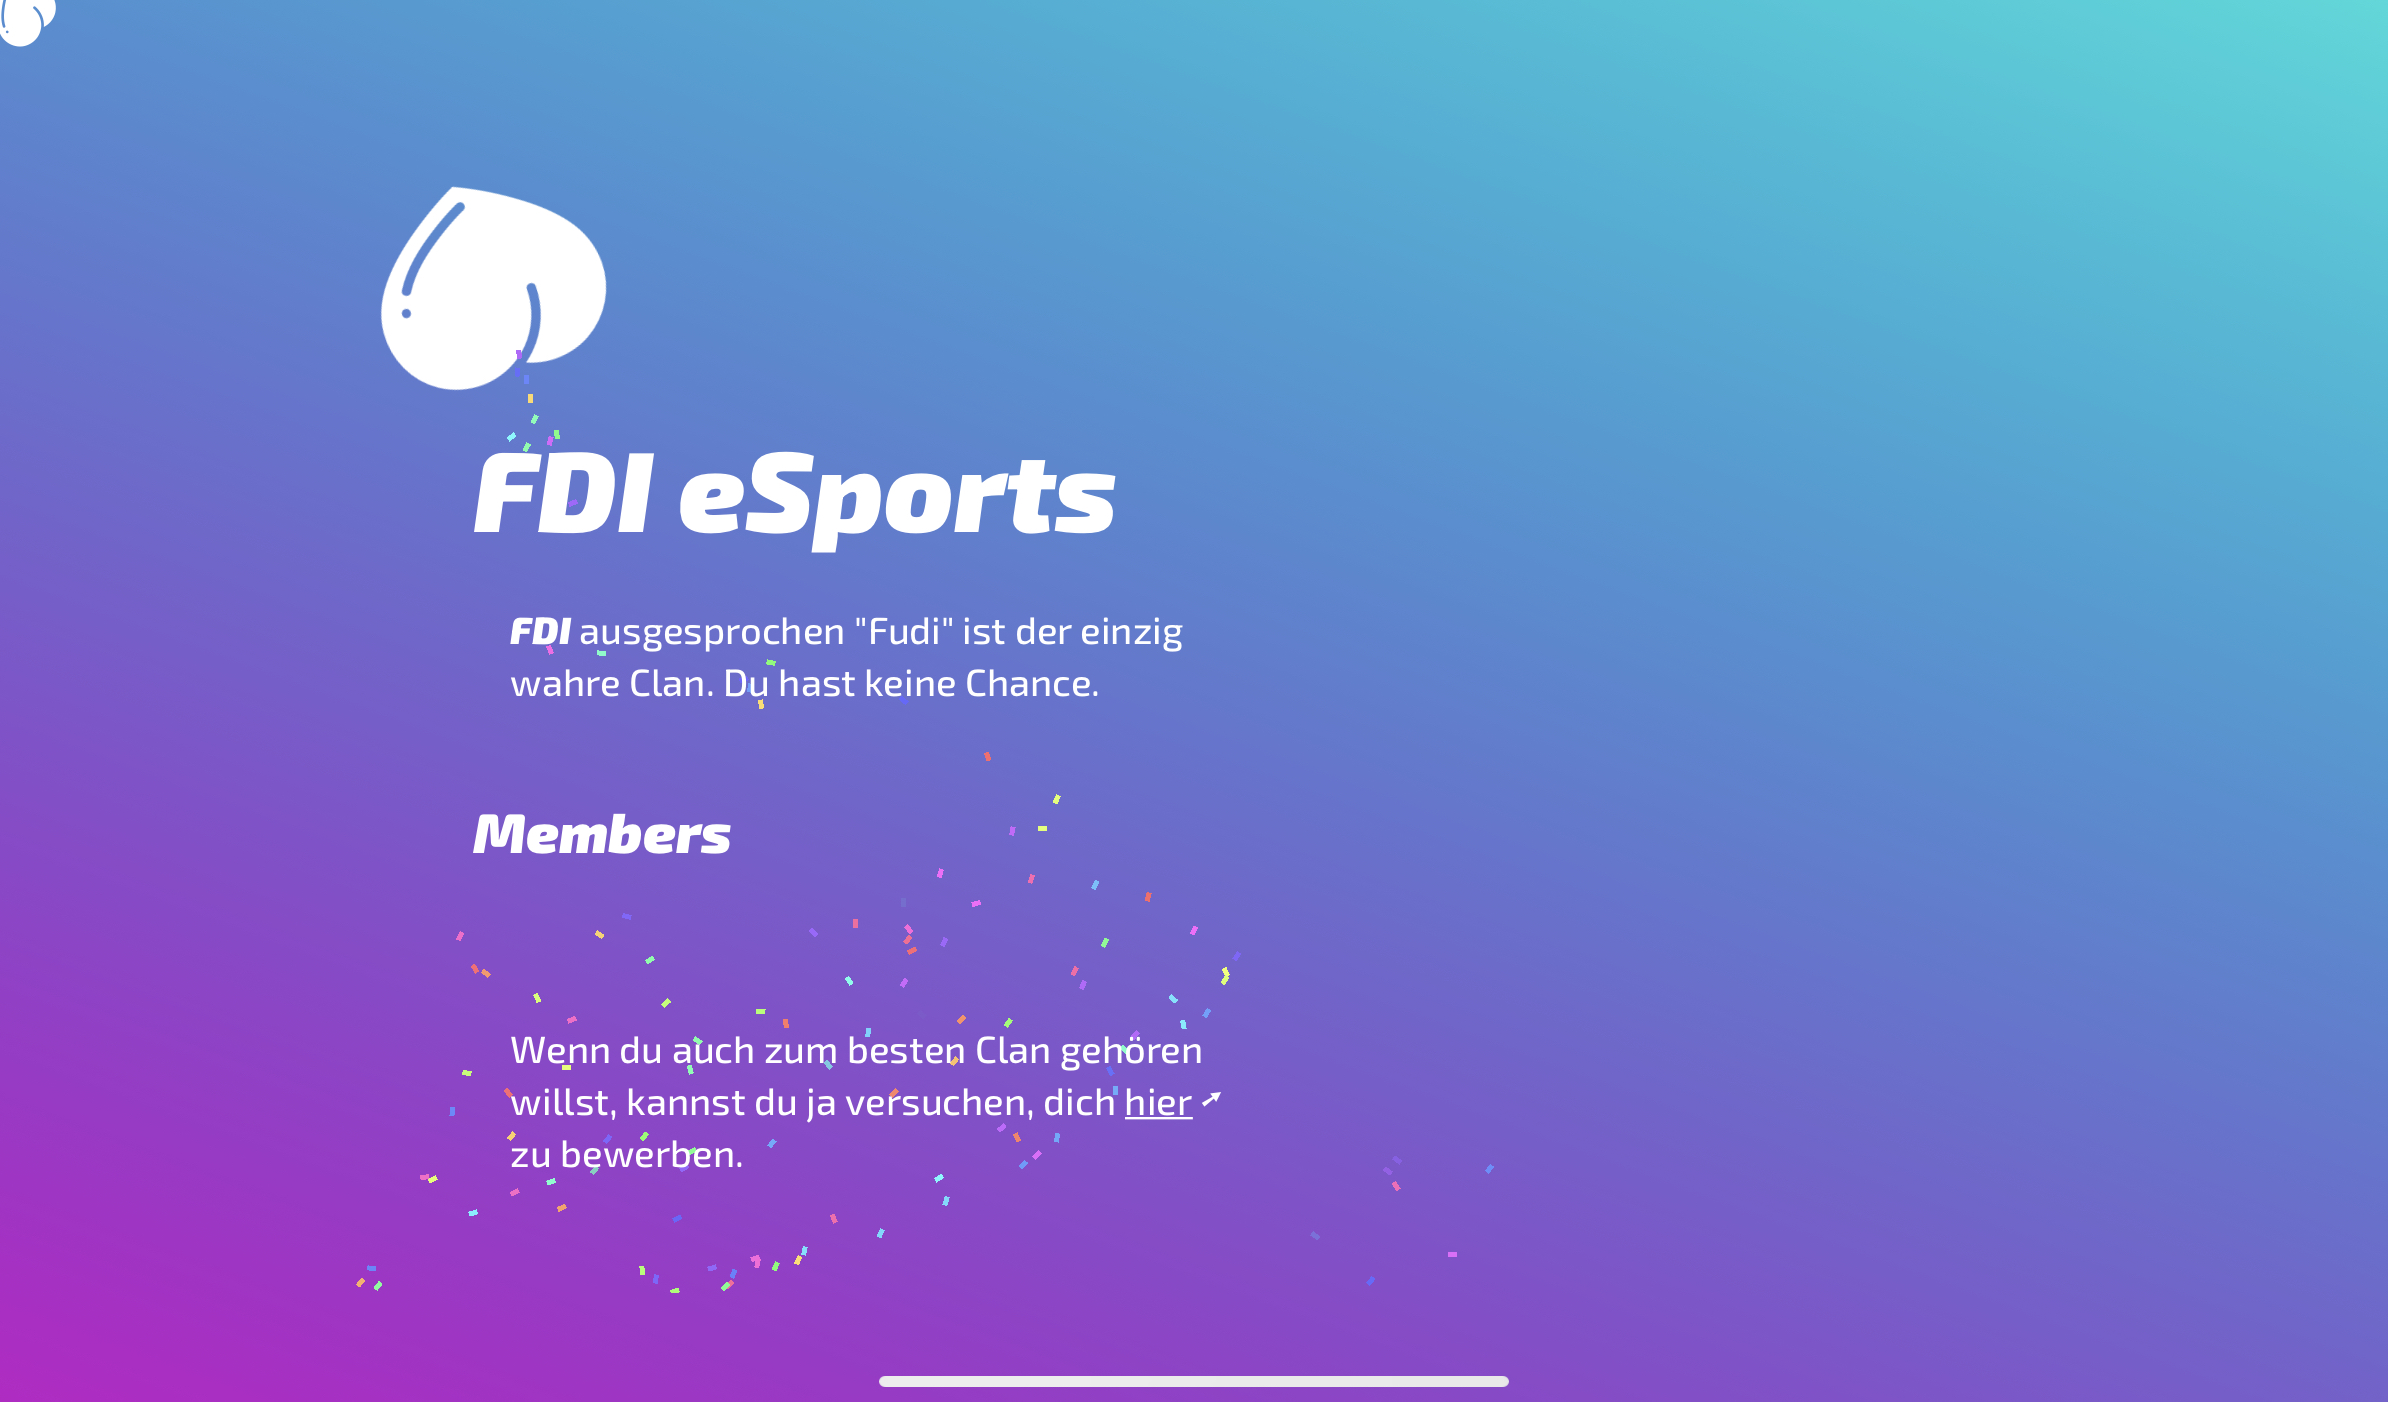 FDI Esports